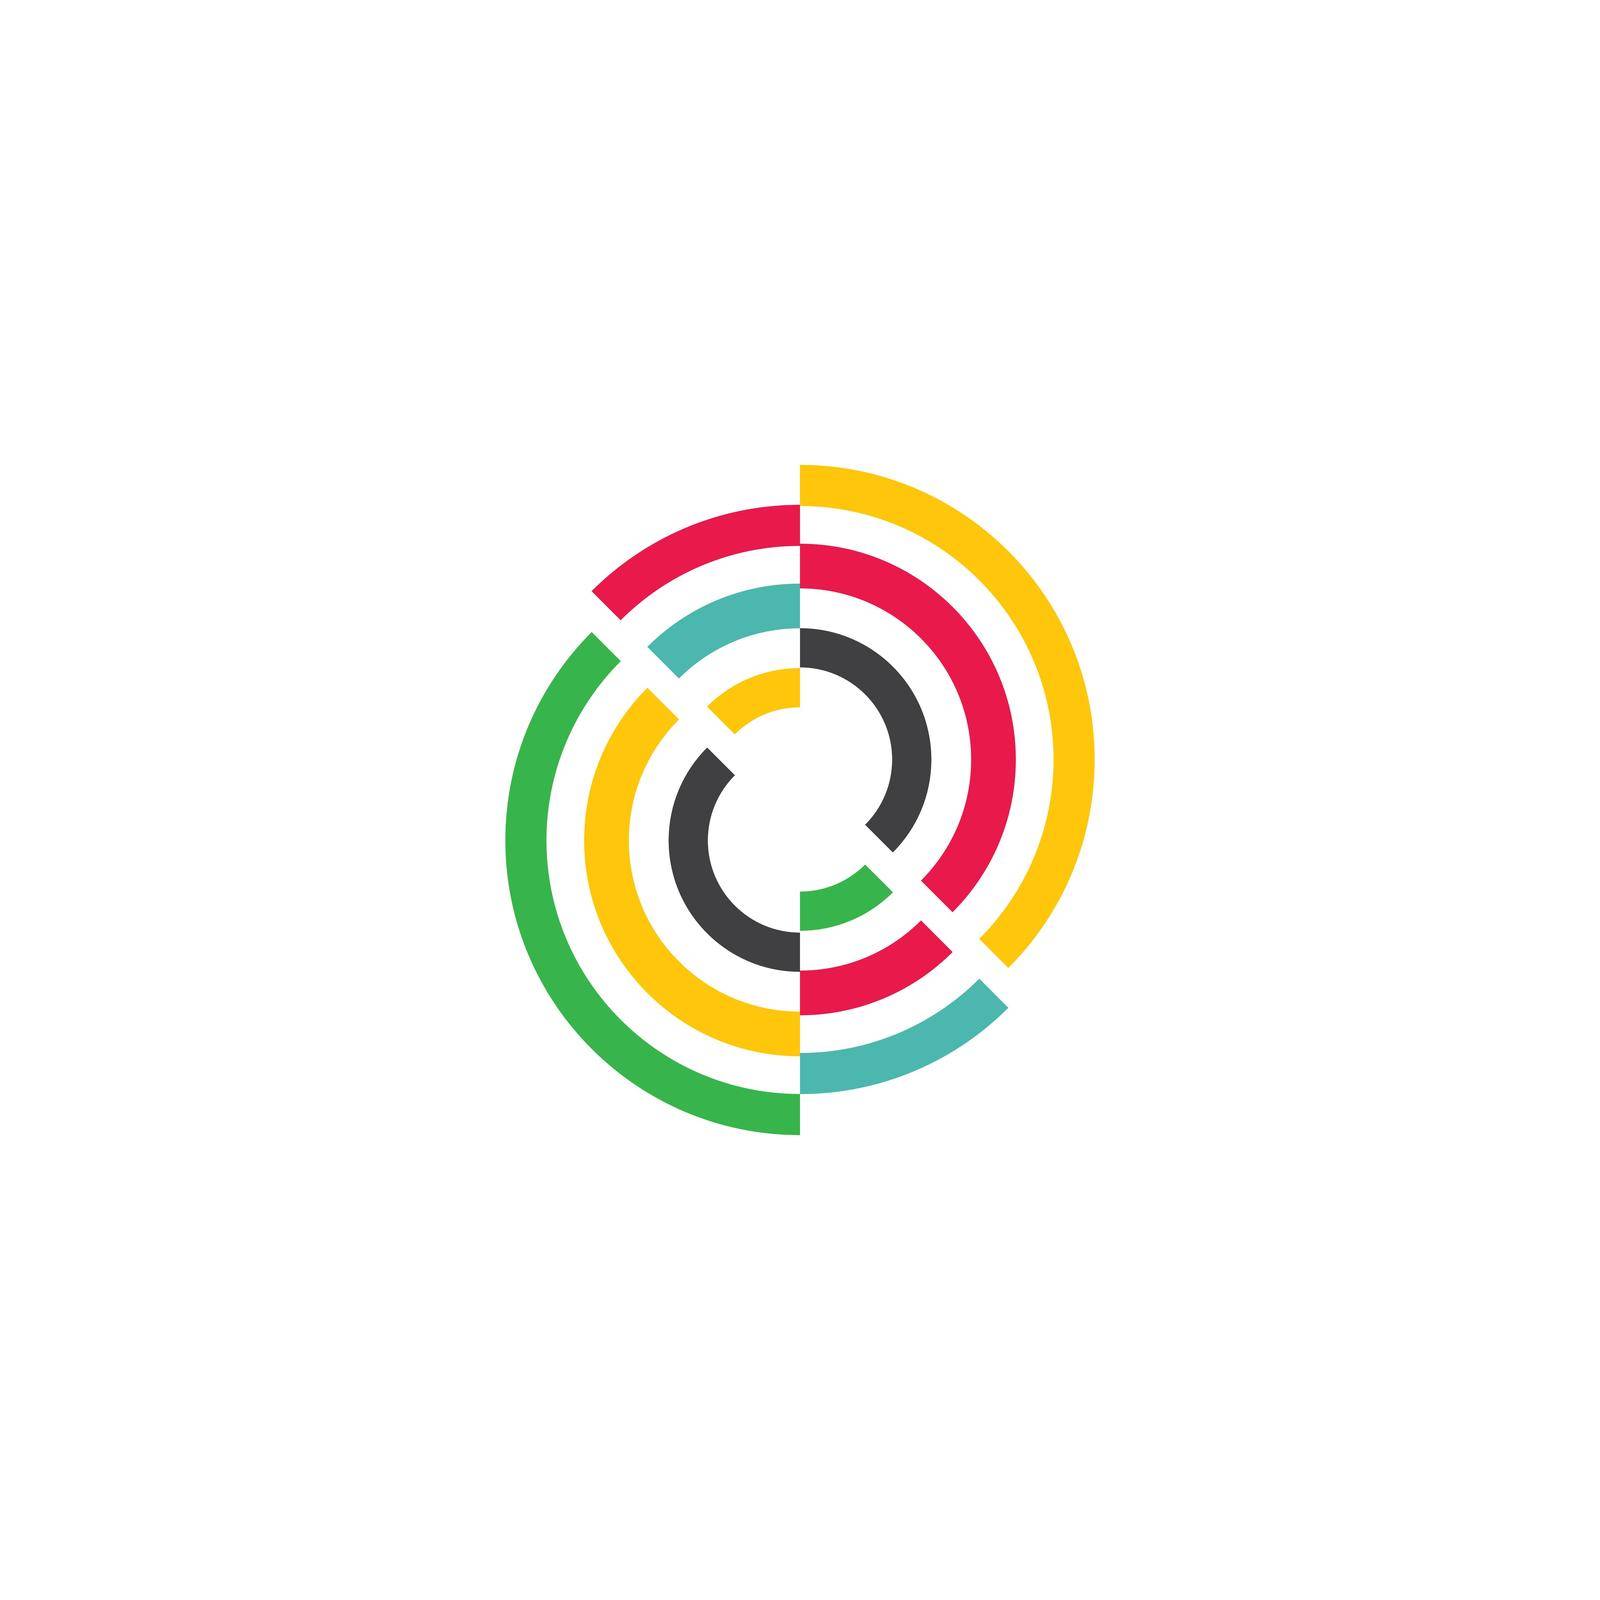 Circular logo by awk